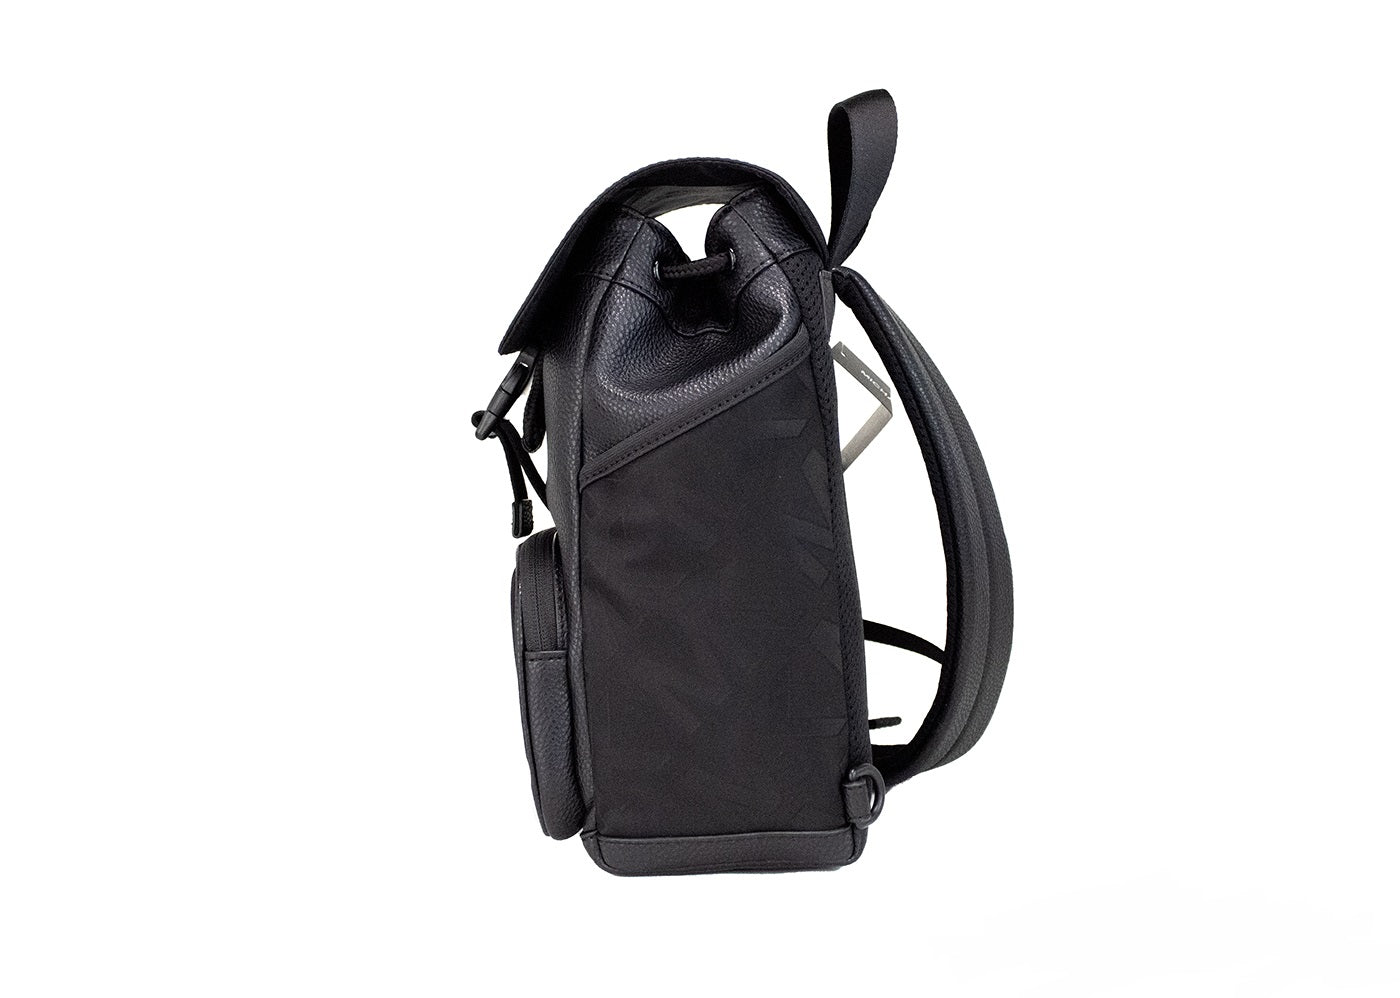 Michael Kors Kent Medium Black Nylon Leather Sport Slingpack Backpack Bag